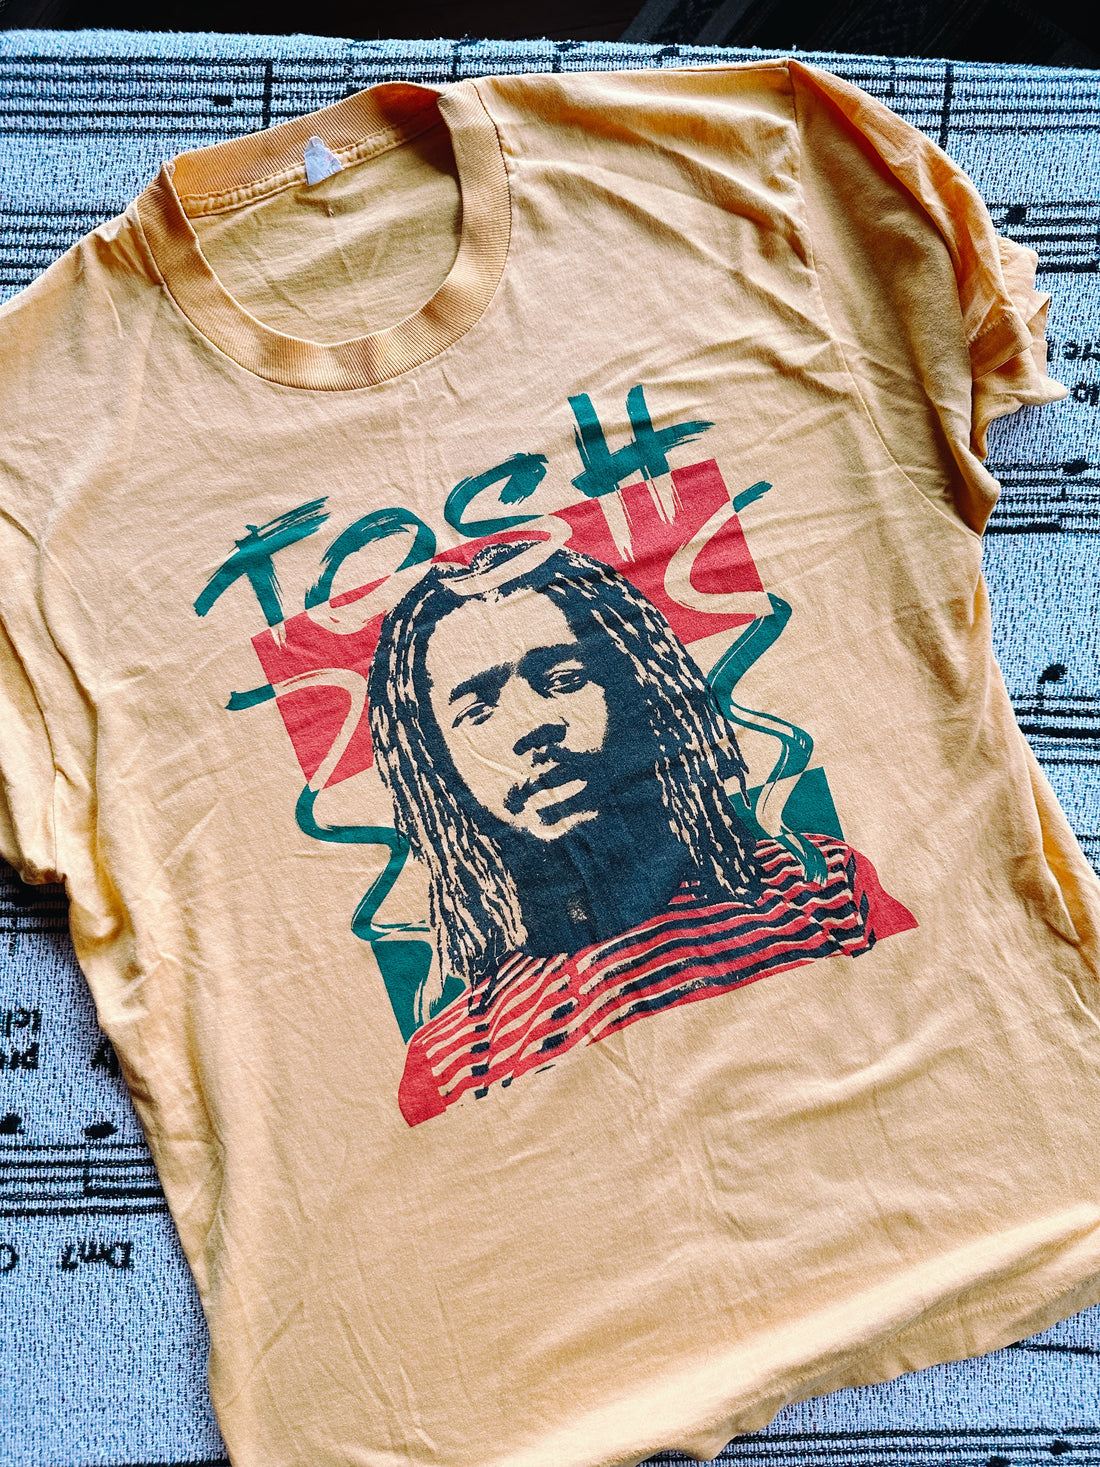 Vintage Peter Tosh Concert T-shirt (1990’s)